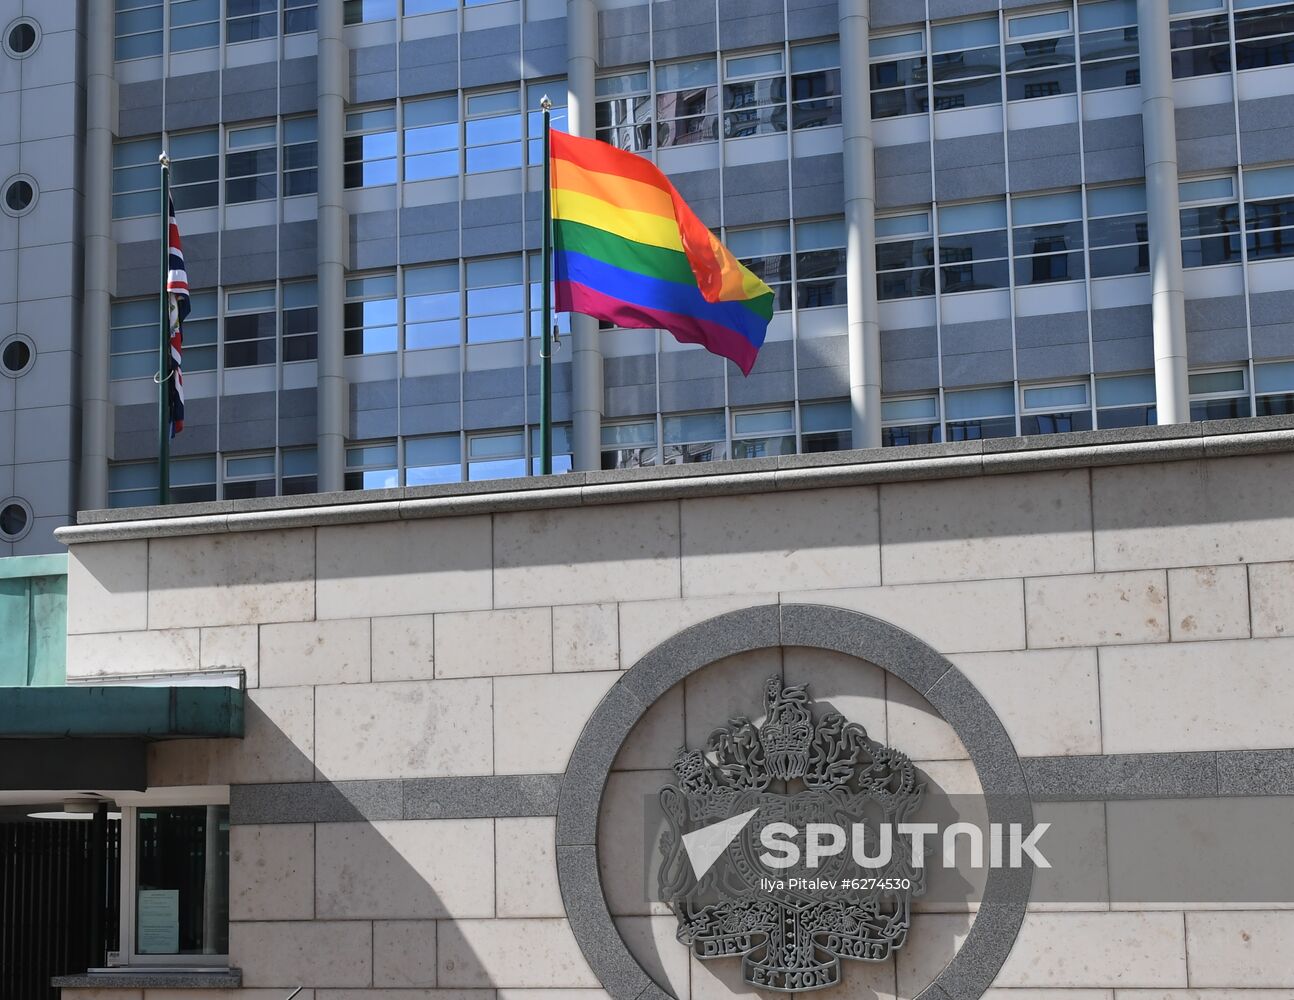 Russia British Embassy LGBT Flag